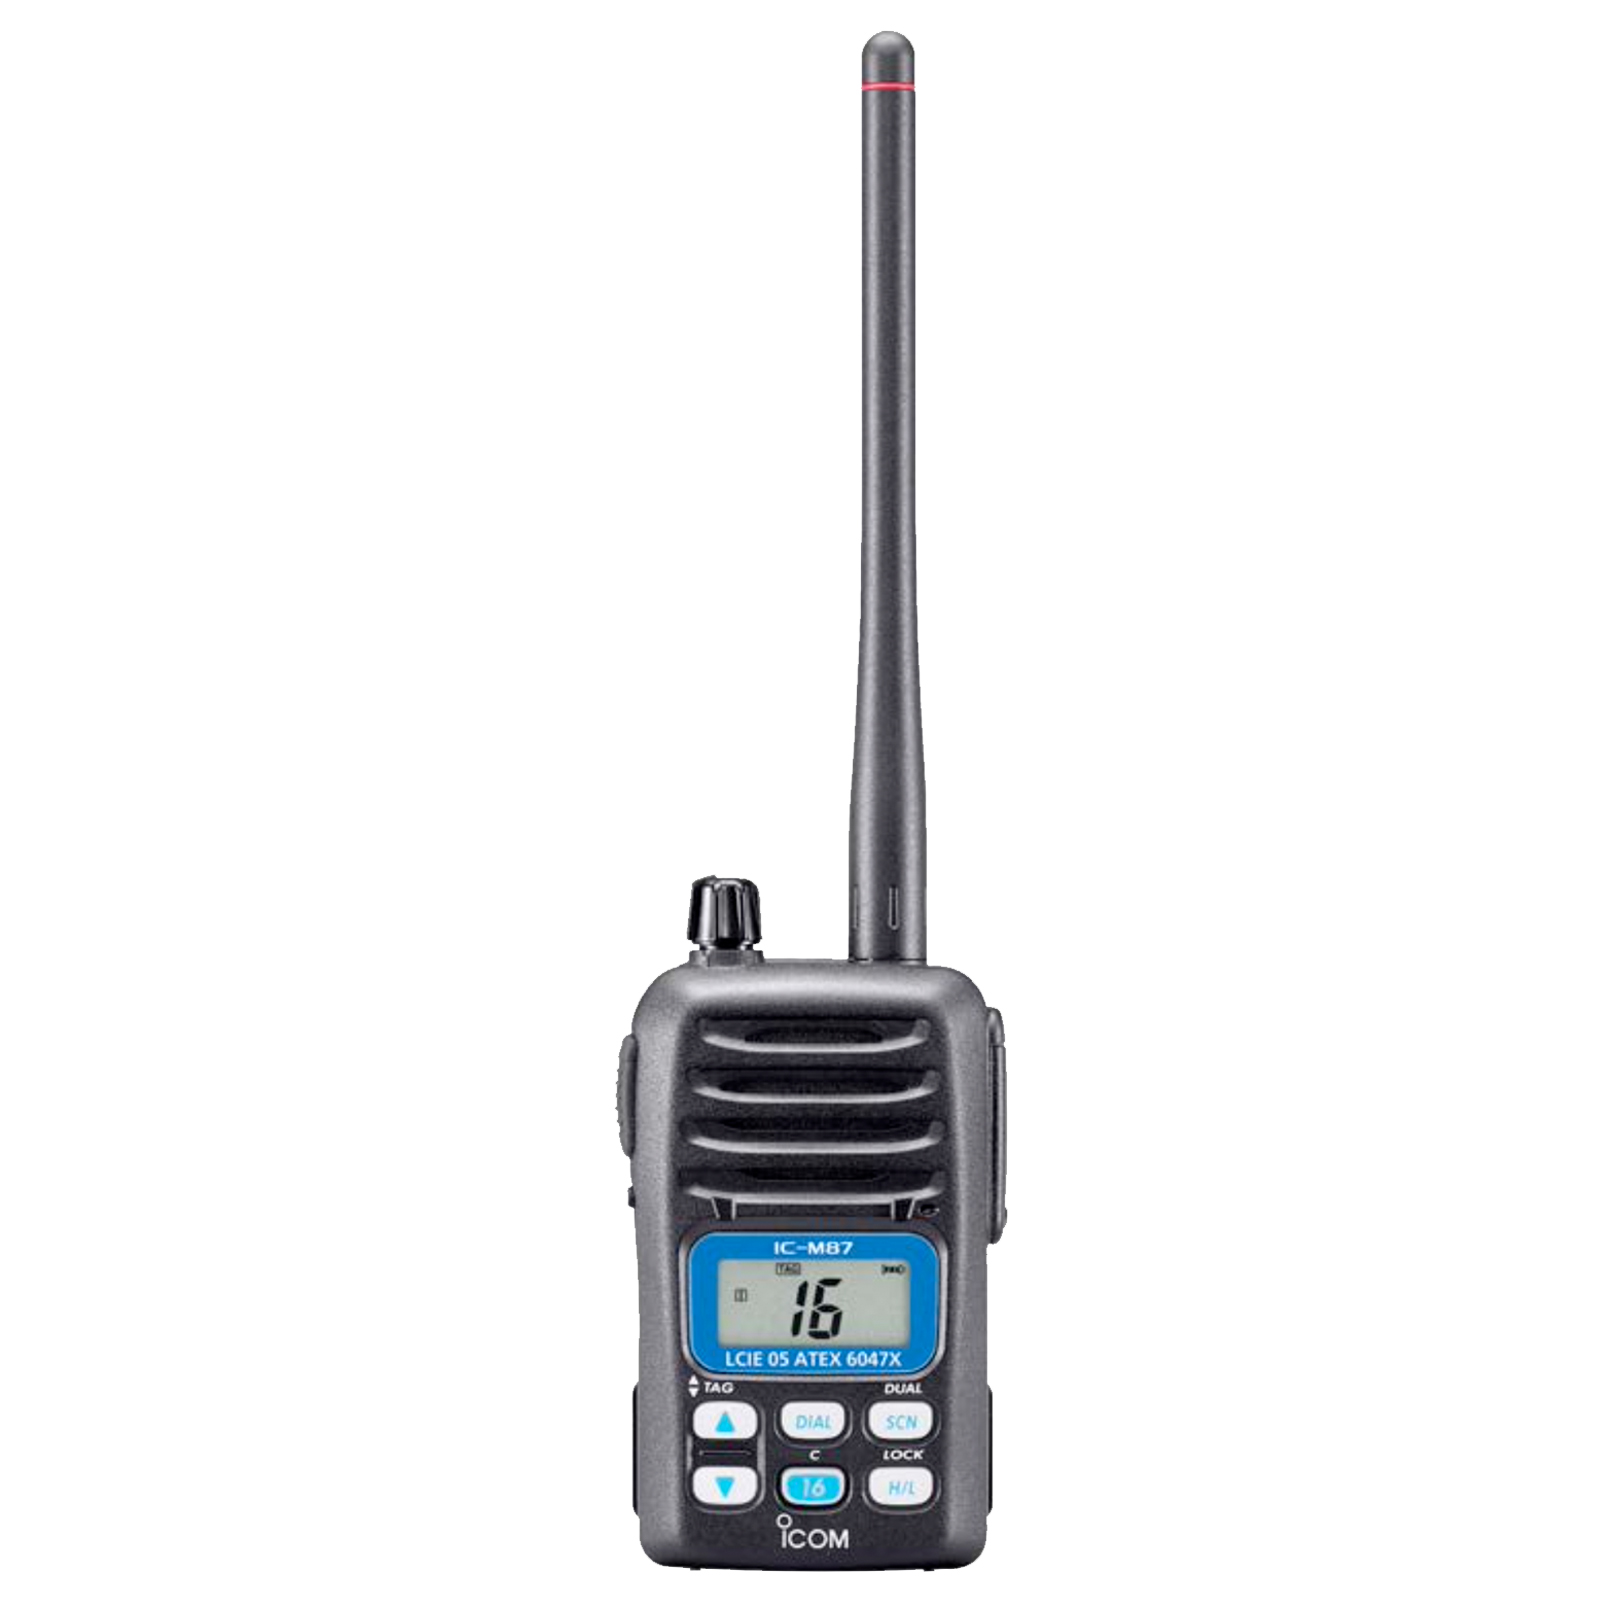 Telestar System Telecomunicazioni Roma Radio portatile nautica ICOM IC-M87 ATEX